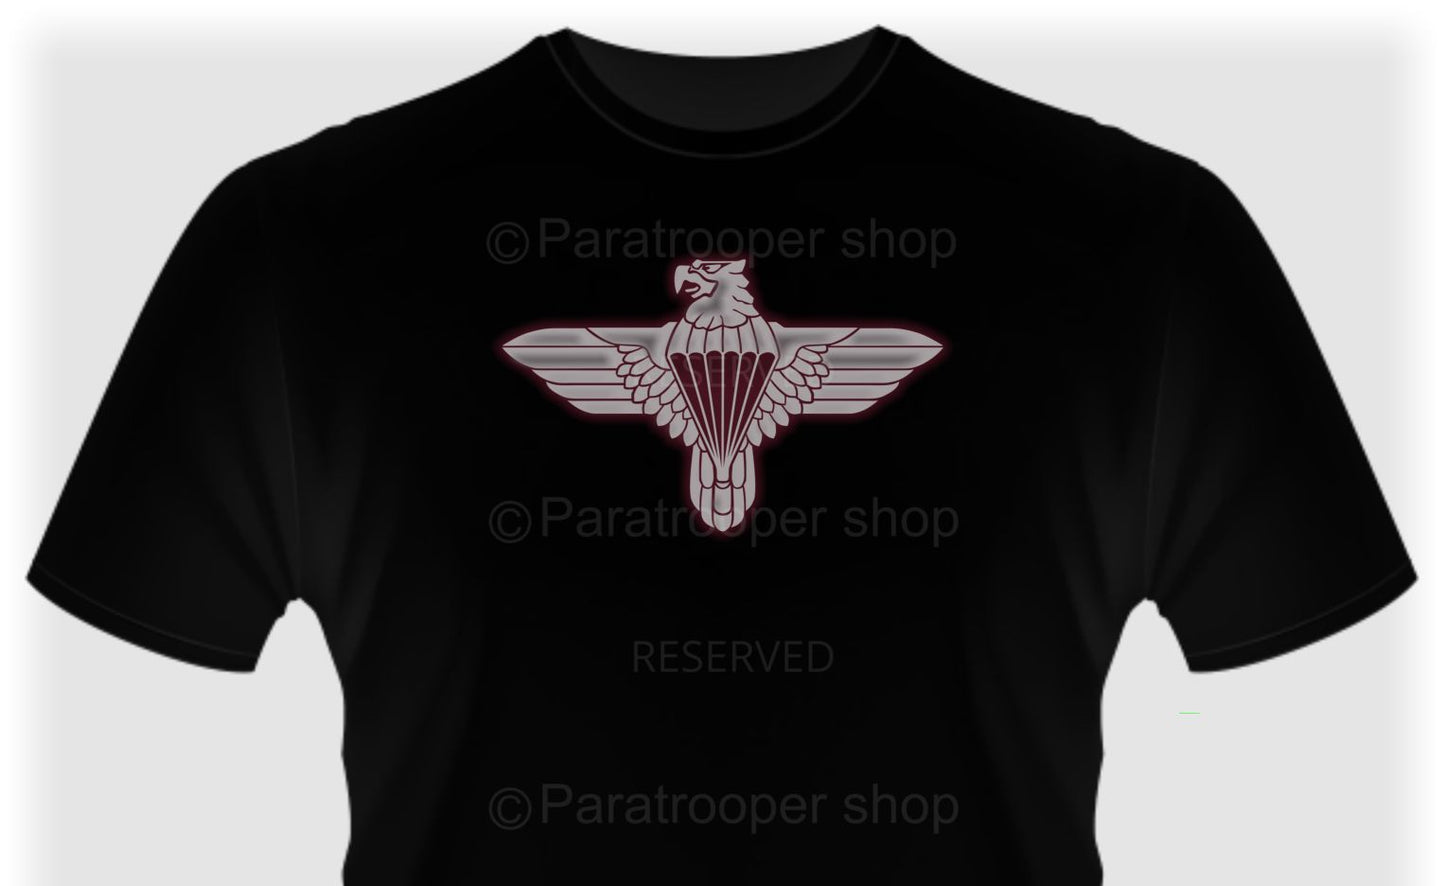 44 Parachute Brigade T-shirt - Iron eagle. Tee-88-44 ParaBrig Paratrooper Shop